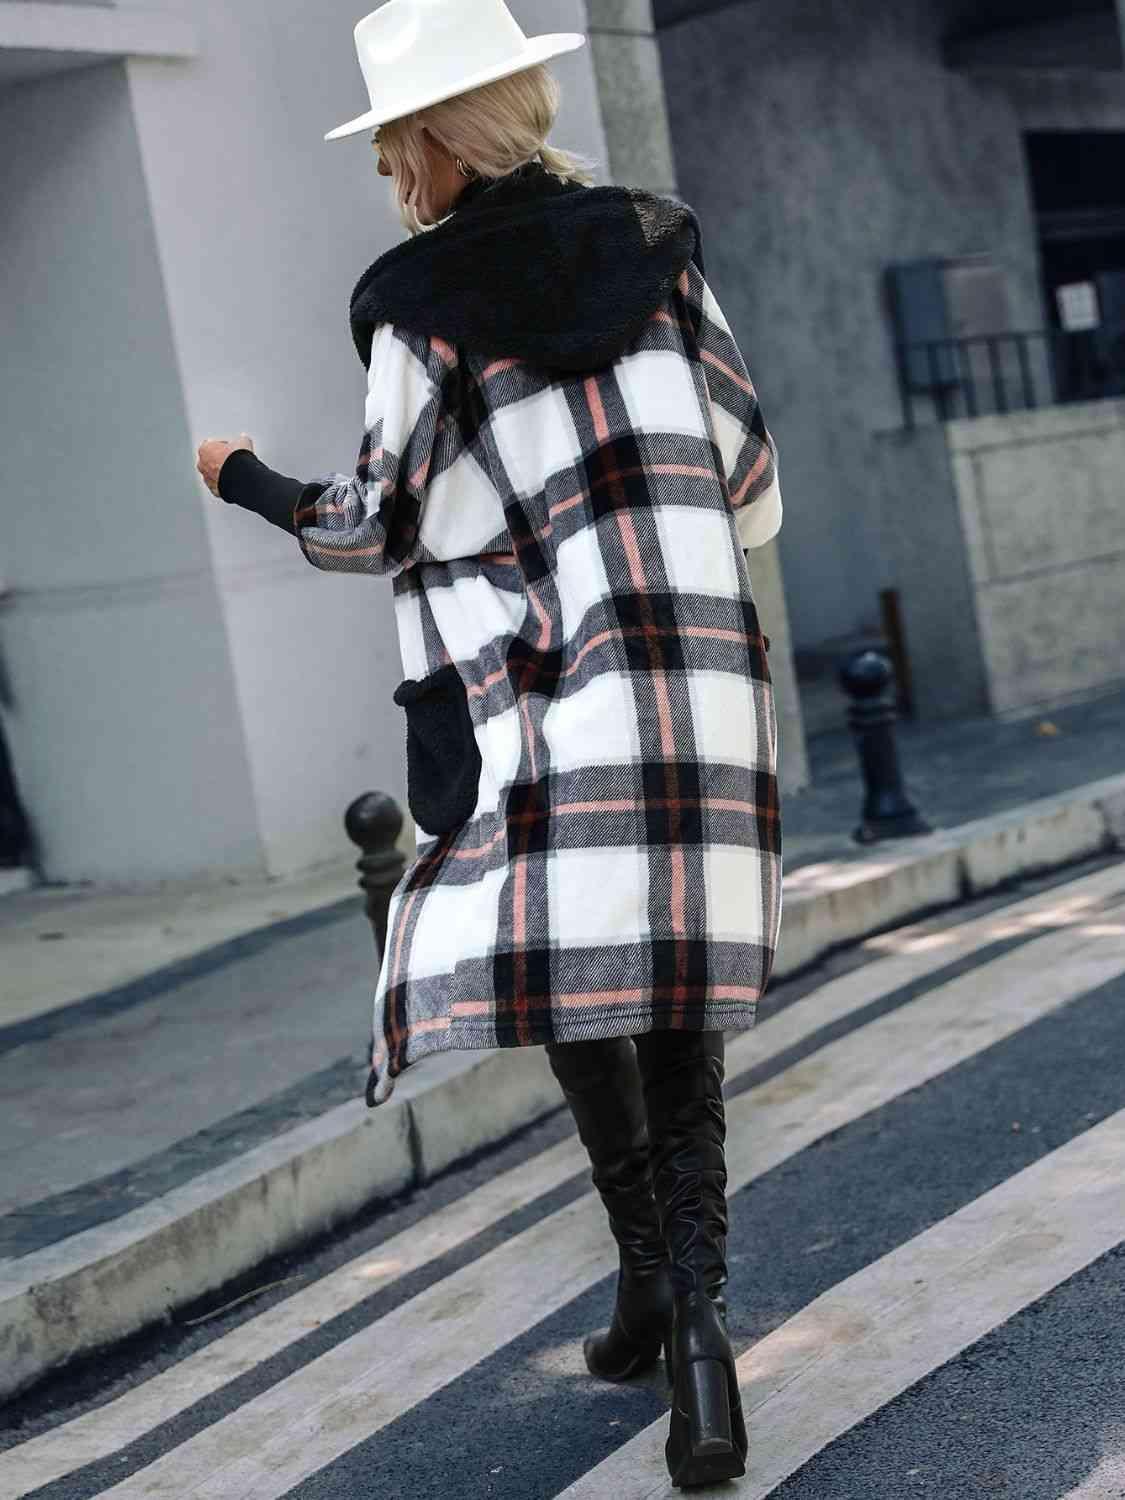 a woman walking down a street wearing a plaid coat